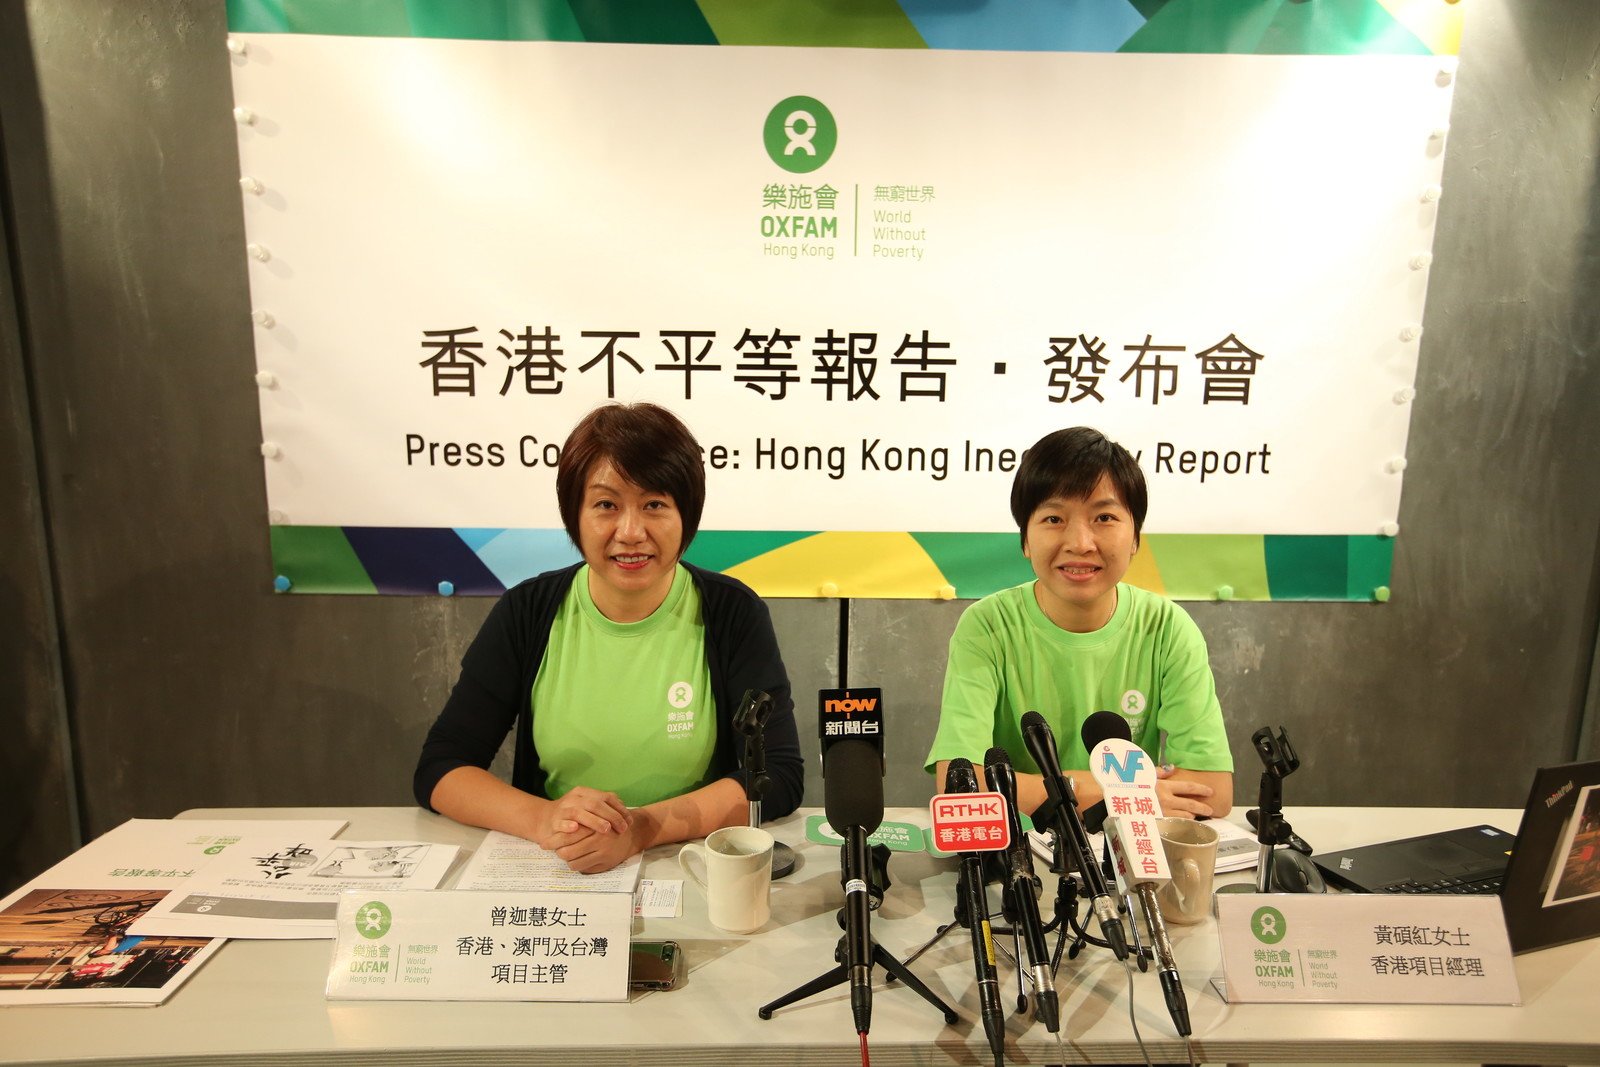  Wong Shek-hung, Hong Kong Programme Manager at Oxfam (right), and Kalina Tsang, Head of Oxfam’s Hong Kong, Macau, Taiwan Programme (left), announced the release of the 'Hong Kong Inequality Report’ today.